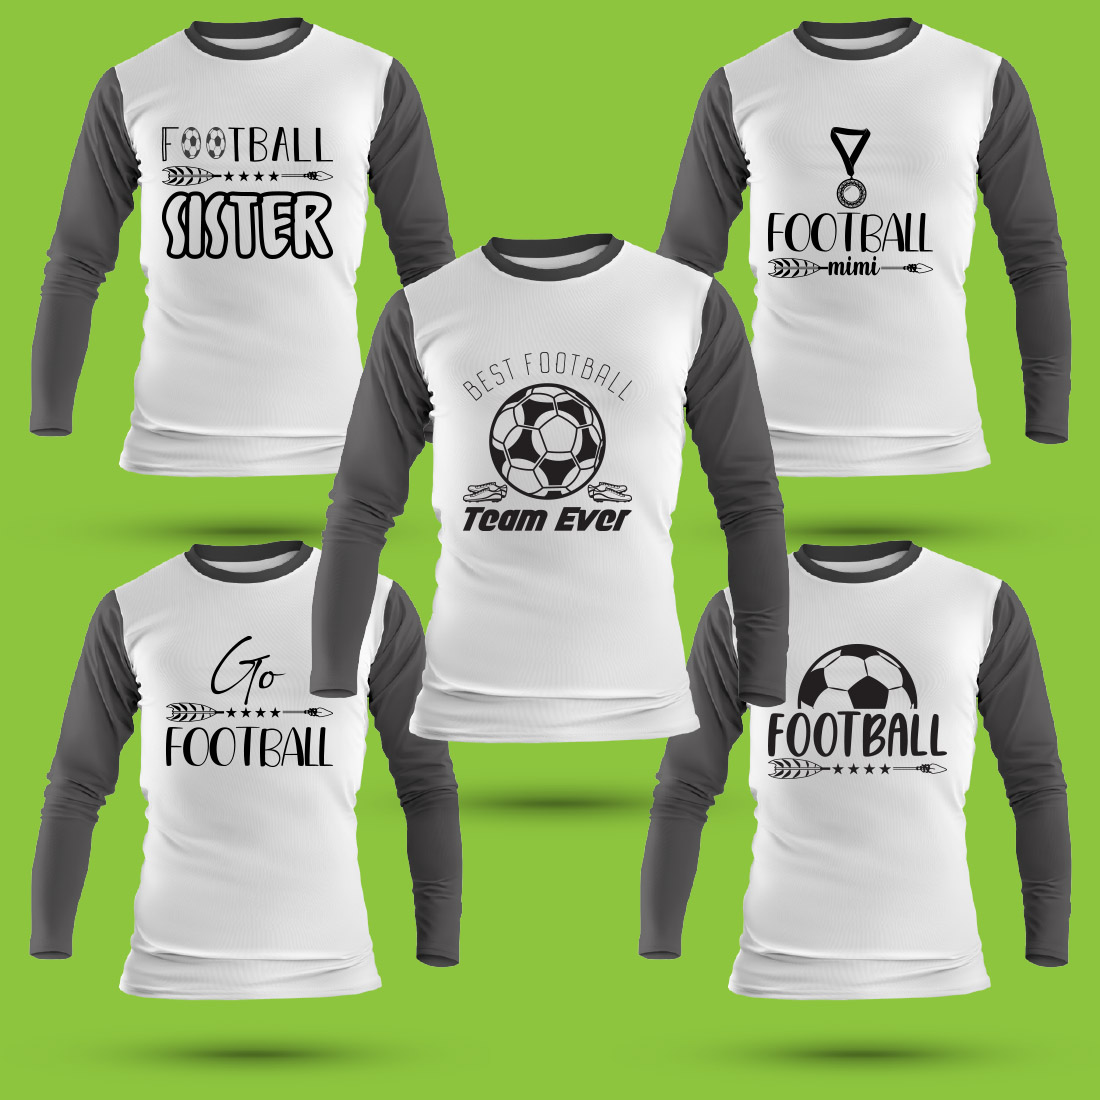 American Football National Championship - Buy t-shirt designs